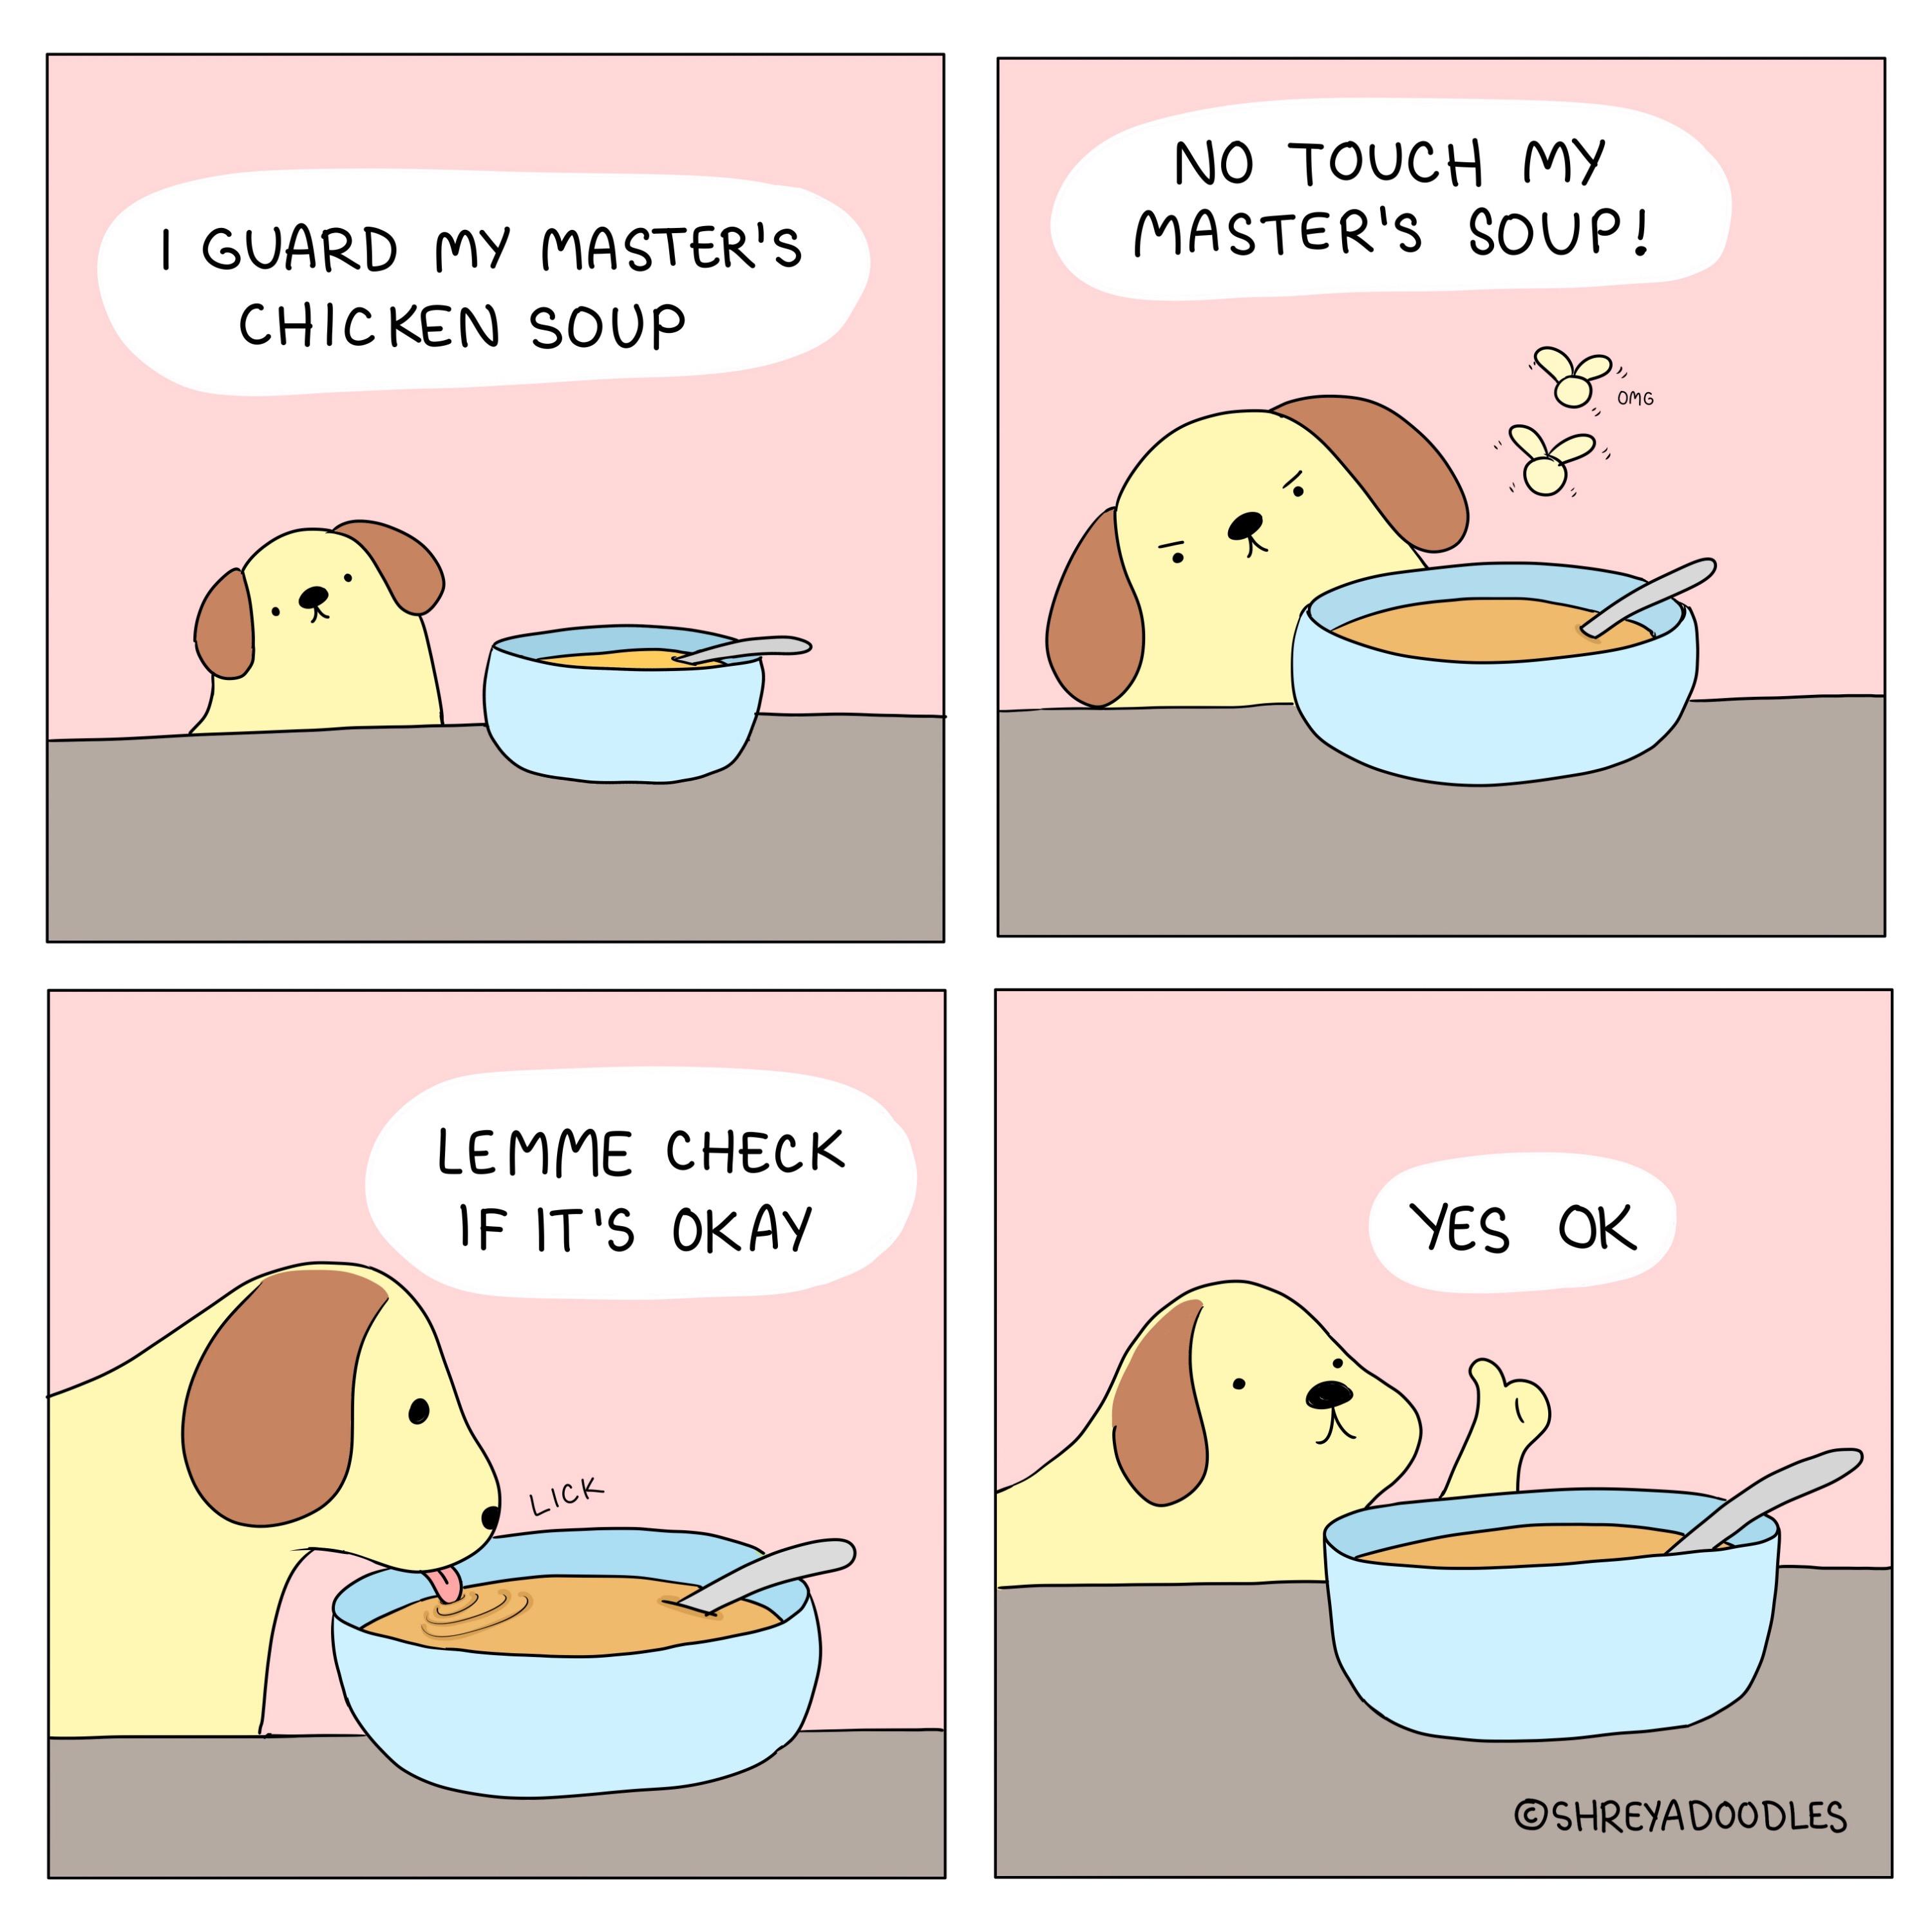 Good soup guardian.